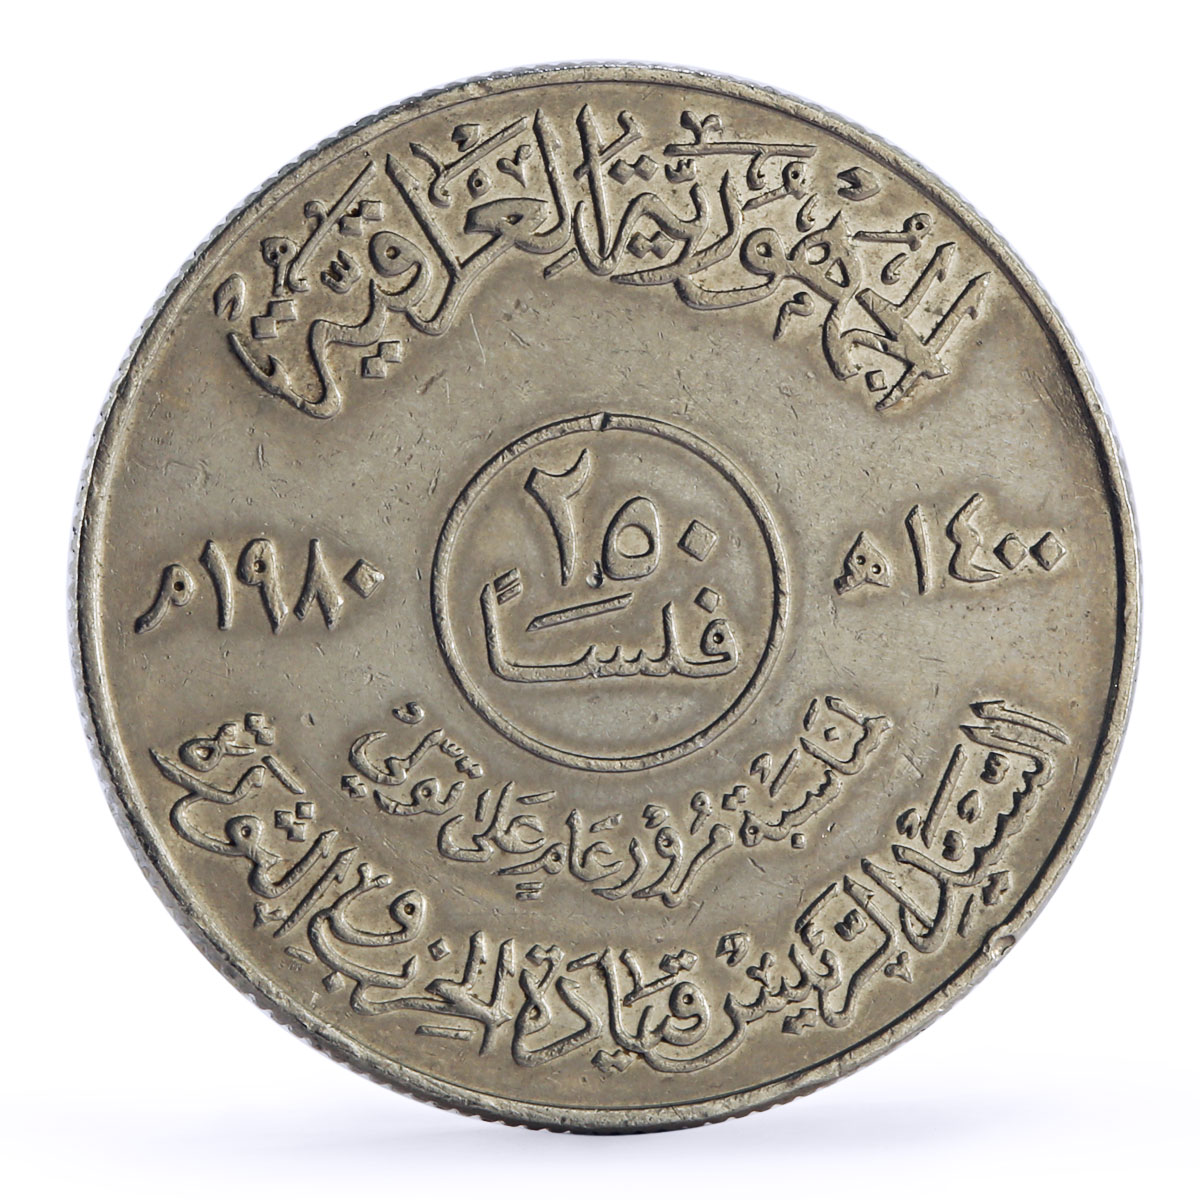 Iraq 250 fils 1st Anniversary President Saddam Hussein CuNi coin 1980